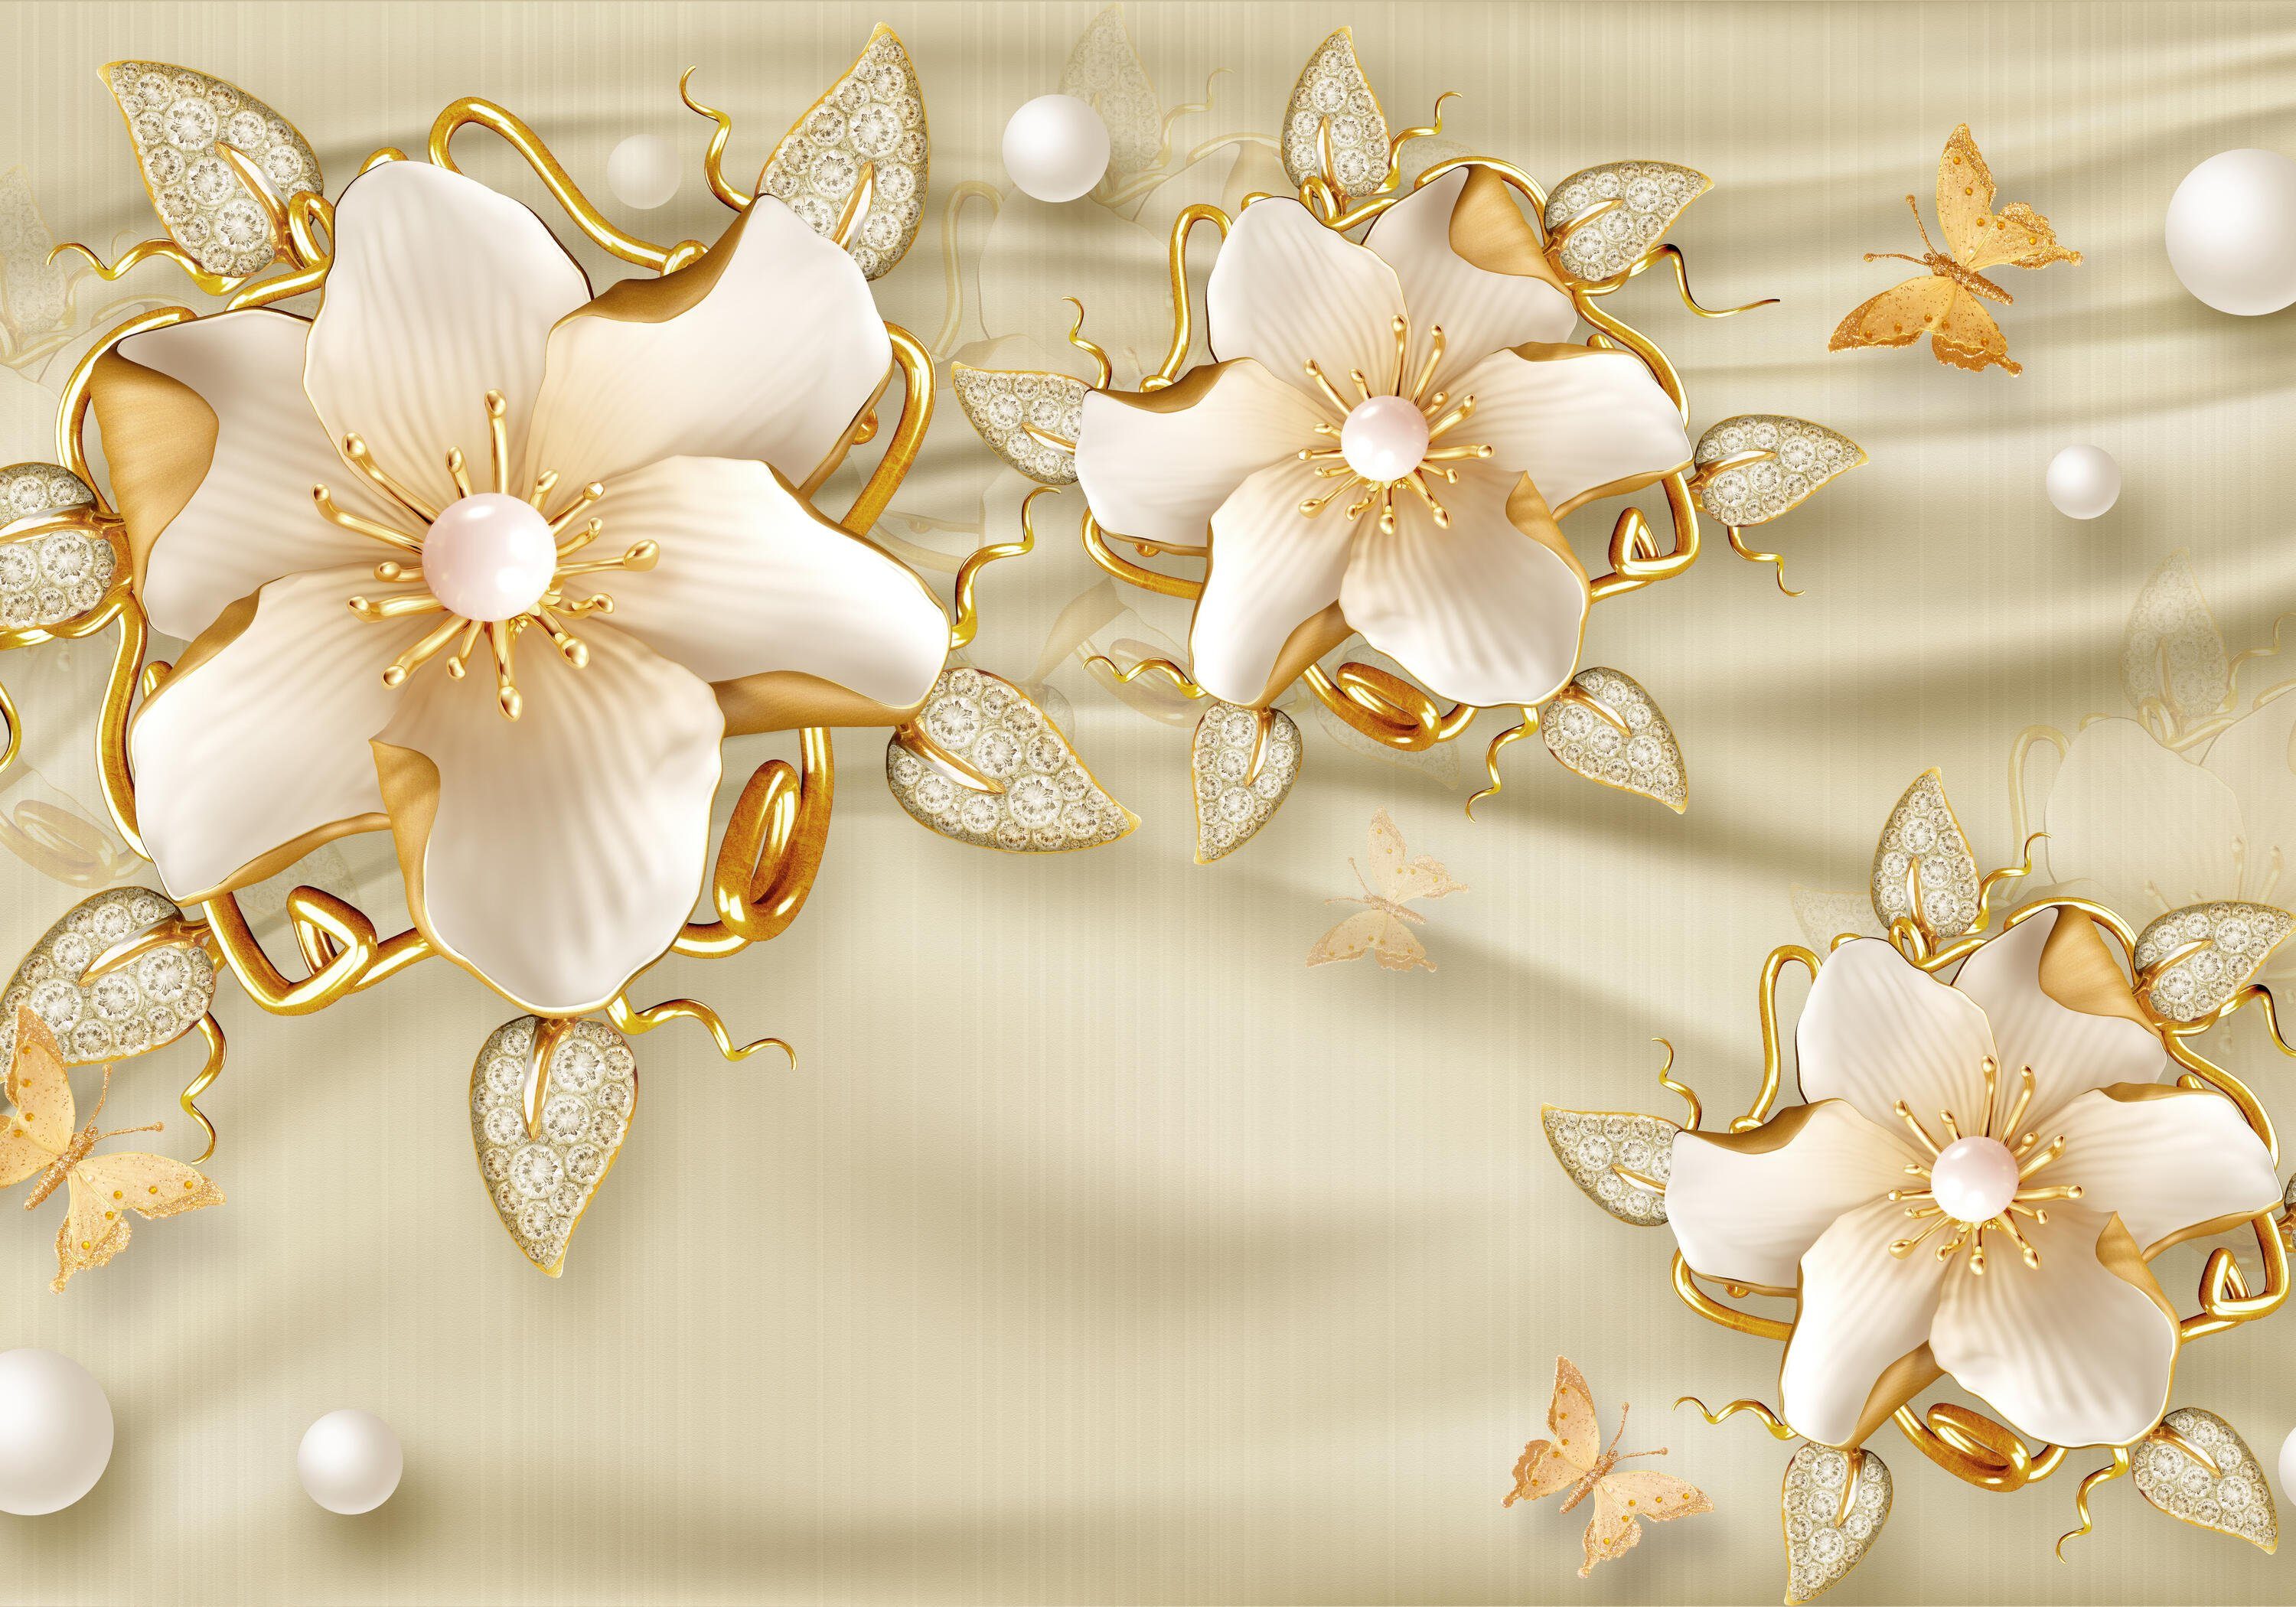 wandmotiv24 Fototapete 3D Blumen Schmetterlinge Kugeln Perlen, glatt, Wandtapete, Motivtapete, matt, Vliestapete